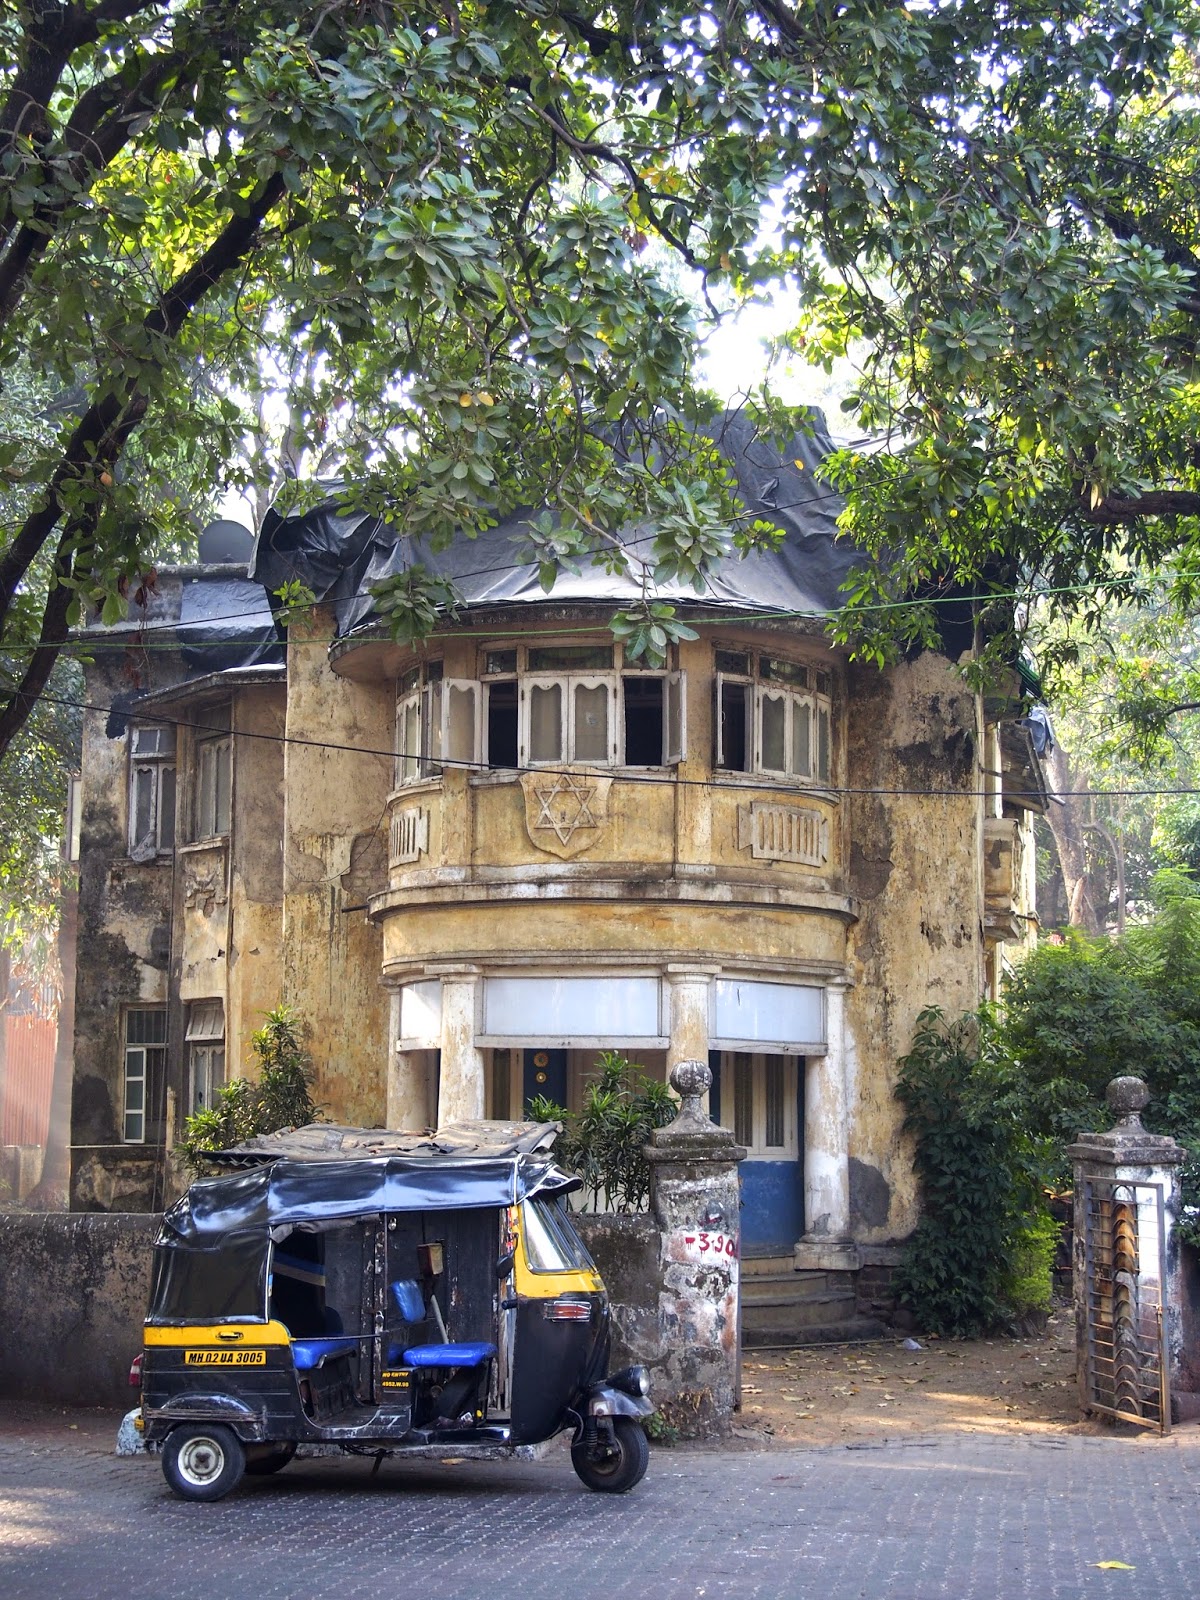 India: Bungalows of Bandra - Bombay's Vanishing Heritage | Minor Sights